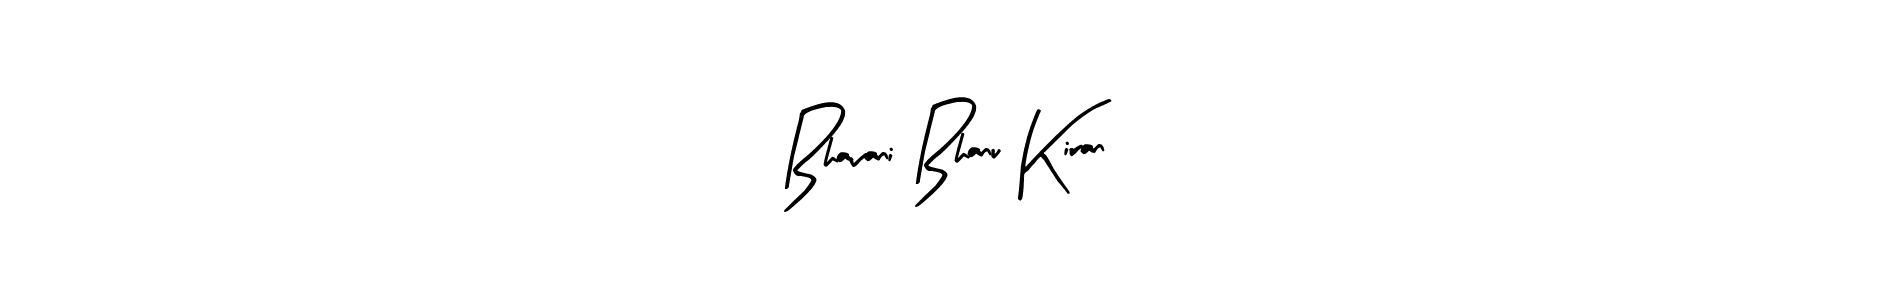 How to Draw Bhavani Bhanu Kiran signature style? Arty Signature is a latest design signature styles for name Bhavani Bhanu Kiran. Bhavani Bhanu Kiran signature style 8 images and pictures png